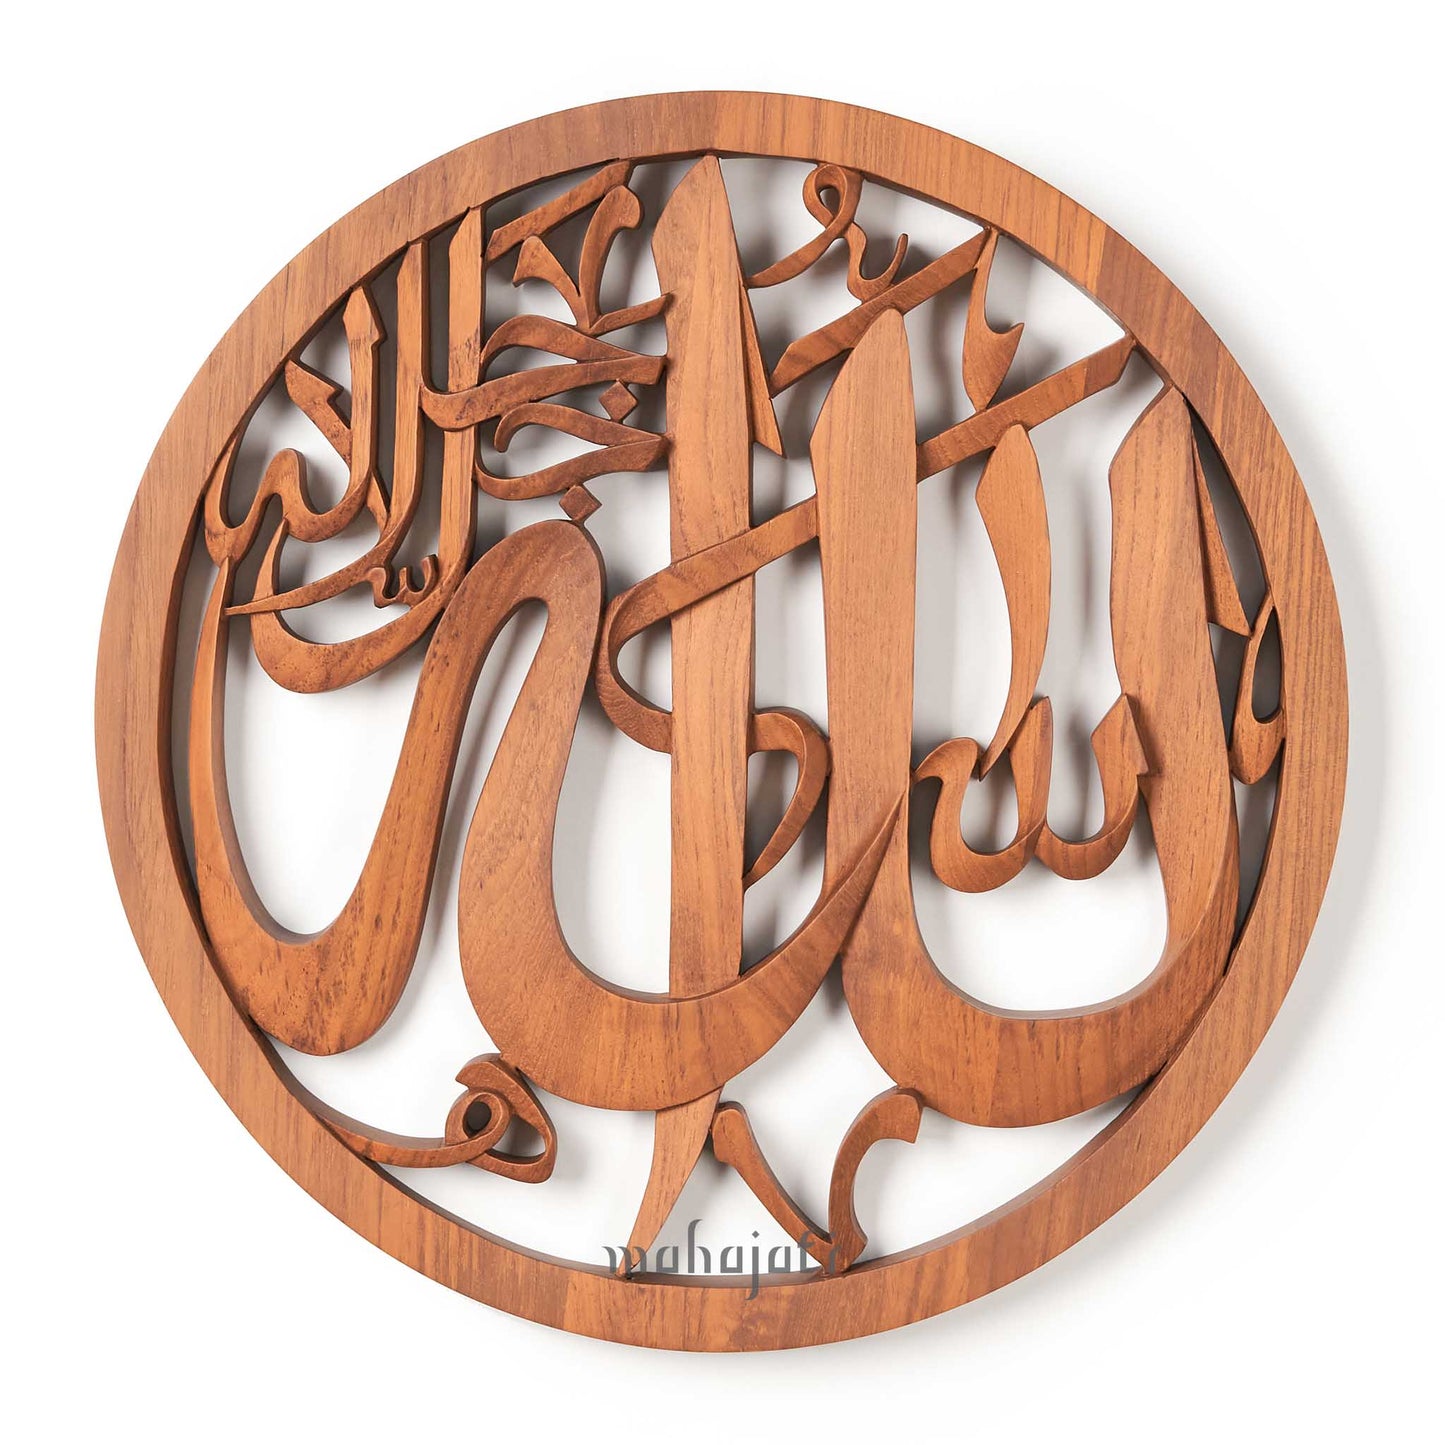 Allah SWT & Muhammad SAW Wall Decor by  Mahajati. Best Islamic Gift Ideas of Wood Carving.